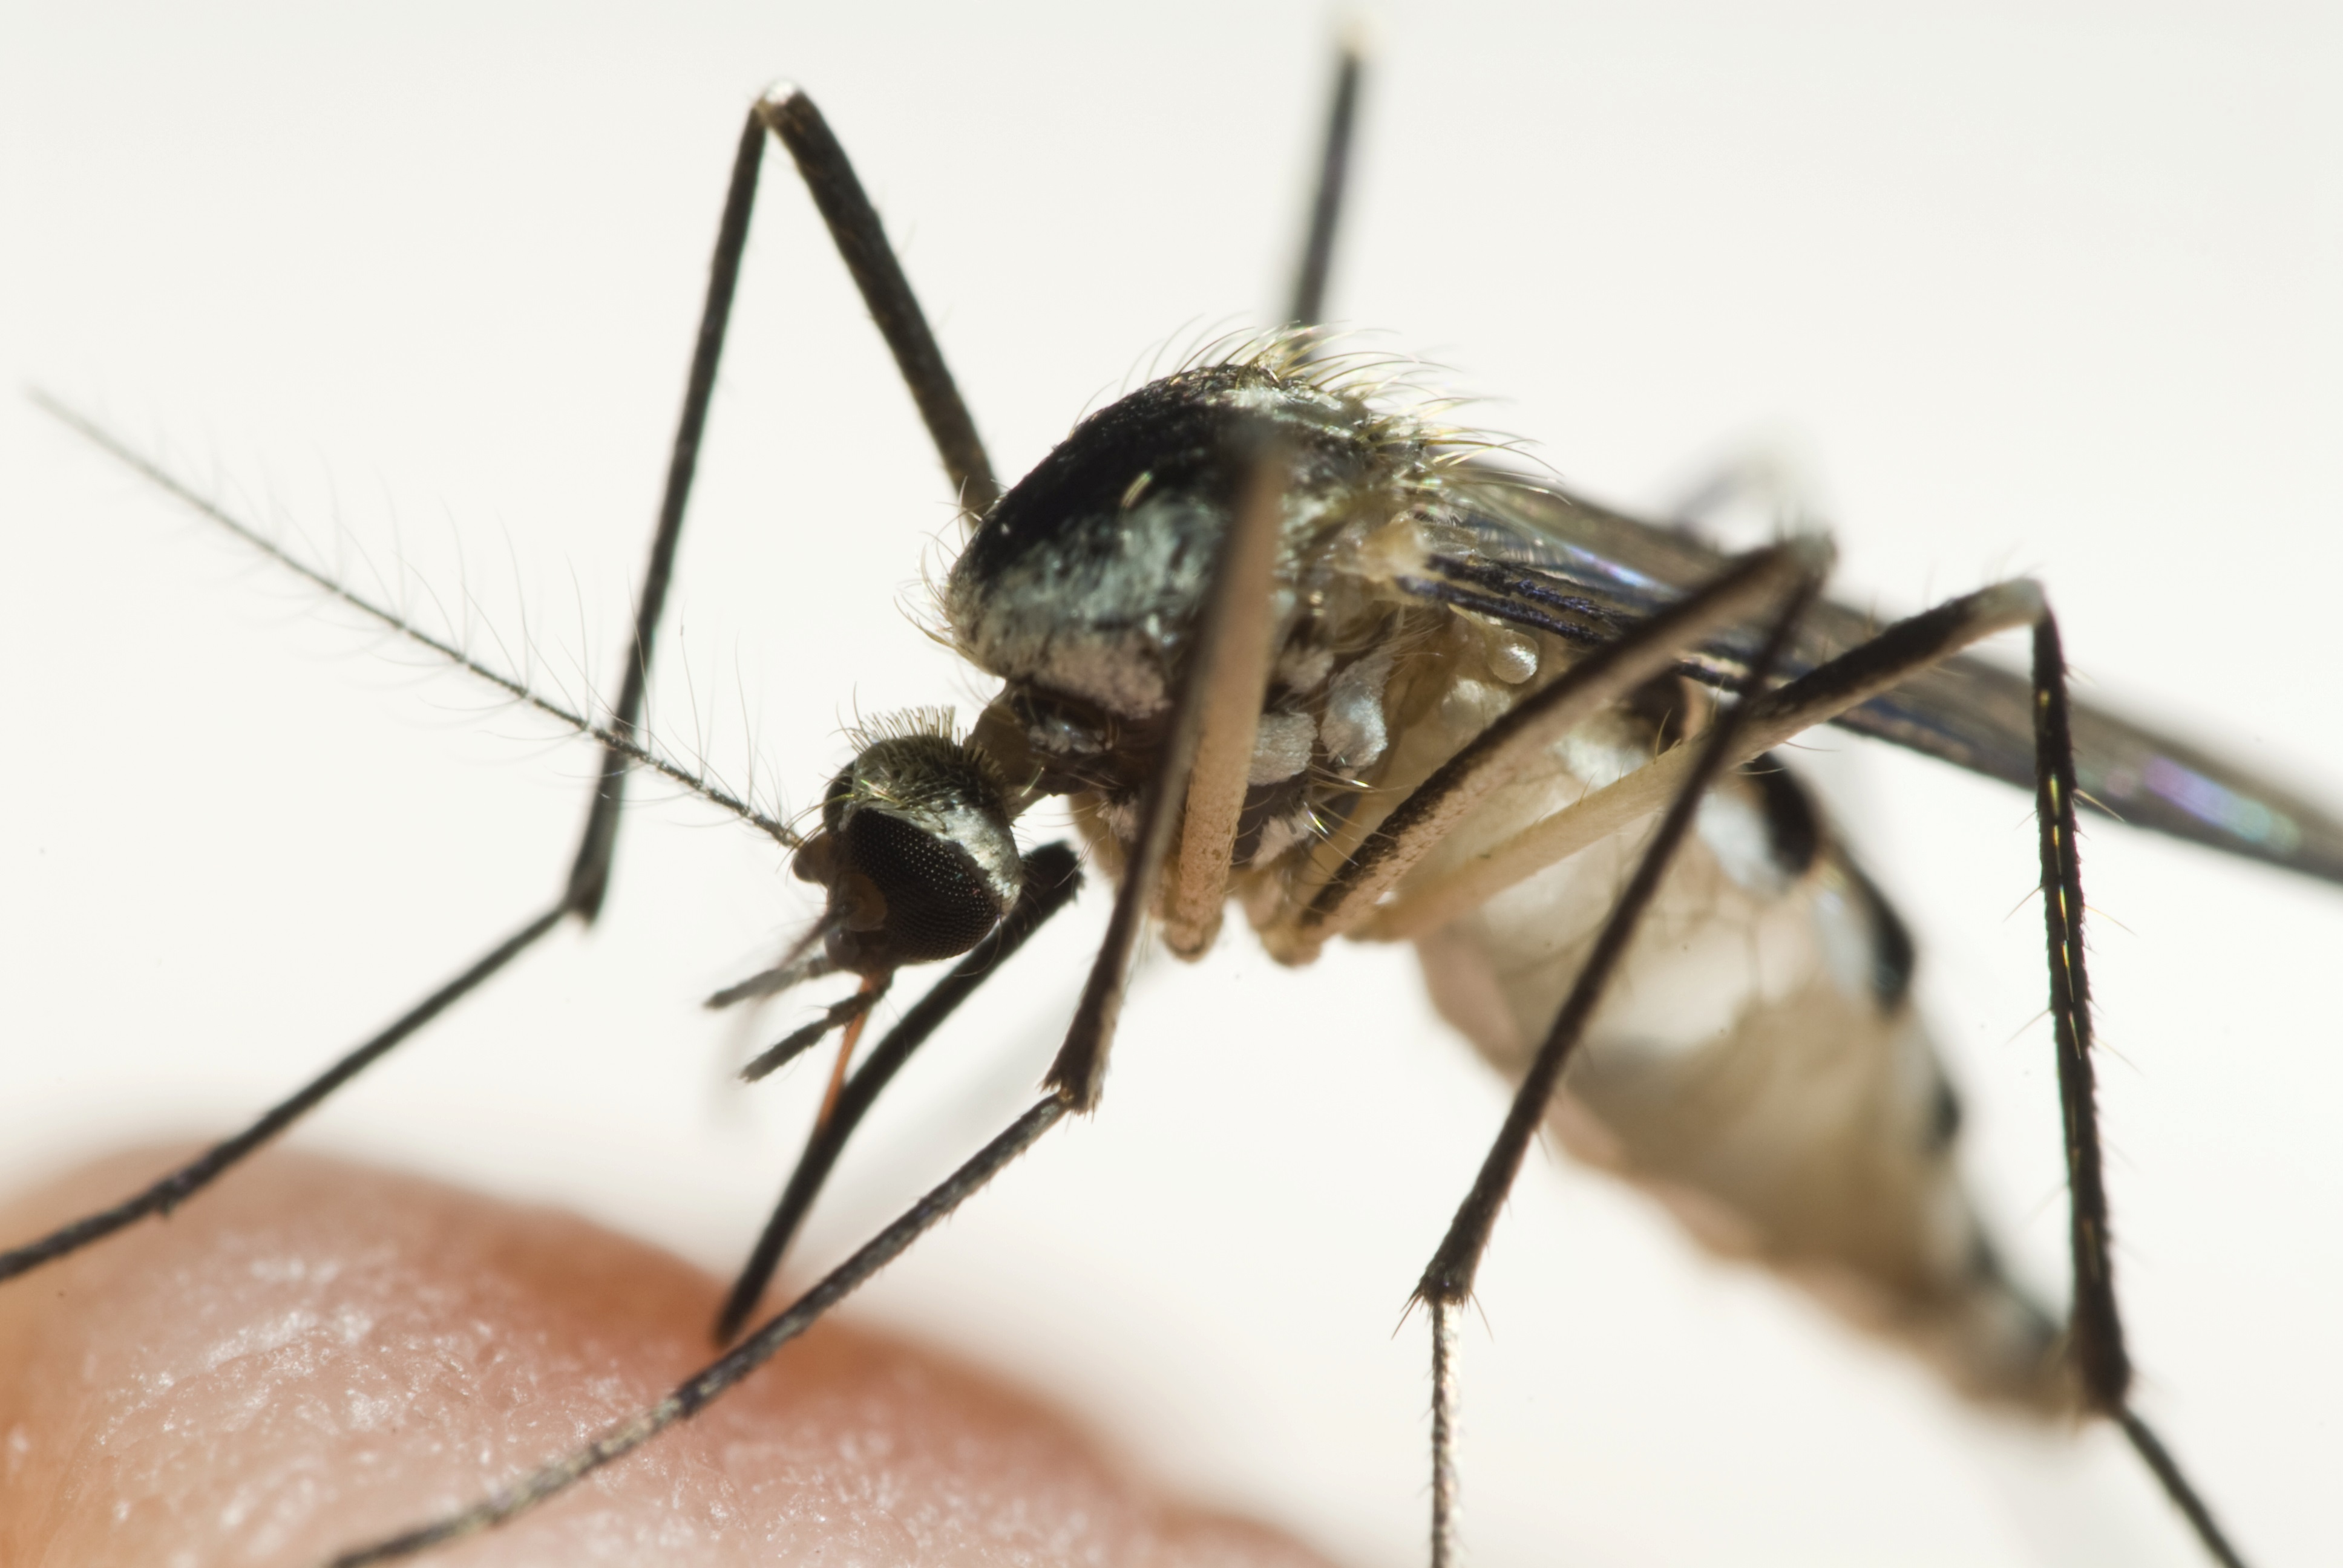 An Aedes triseriatus mosquito found prior to providing Mosquito Control for Buffalo.